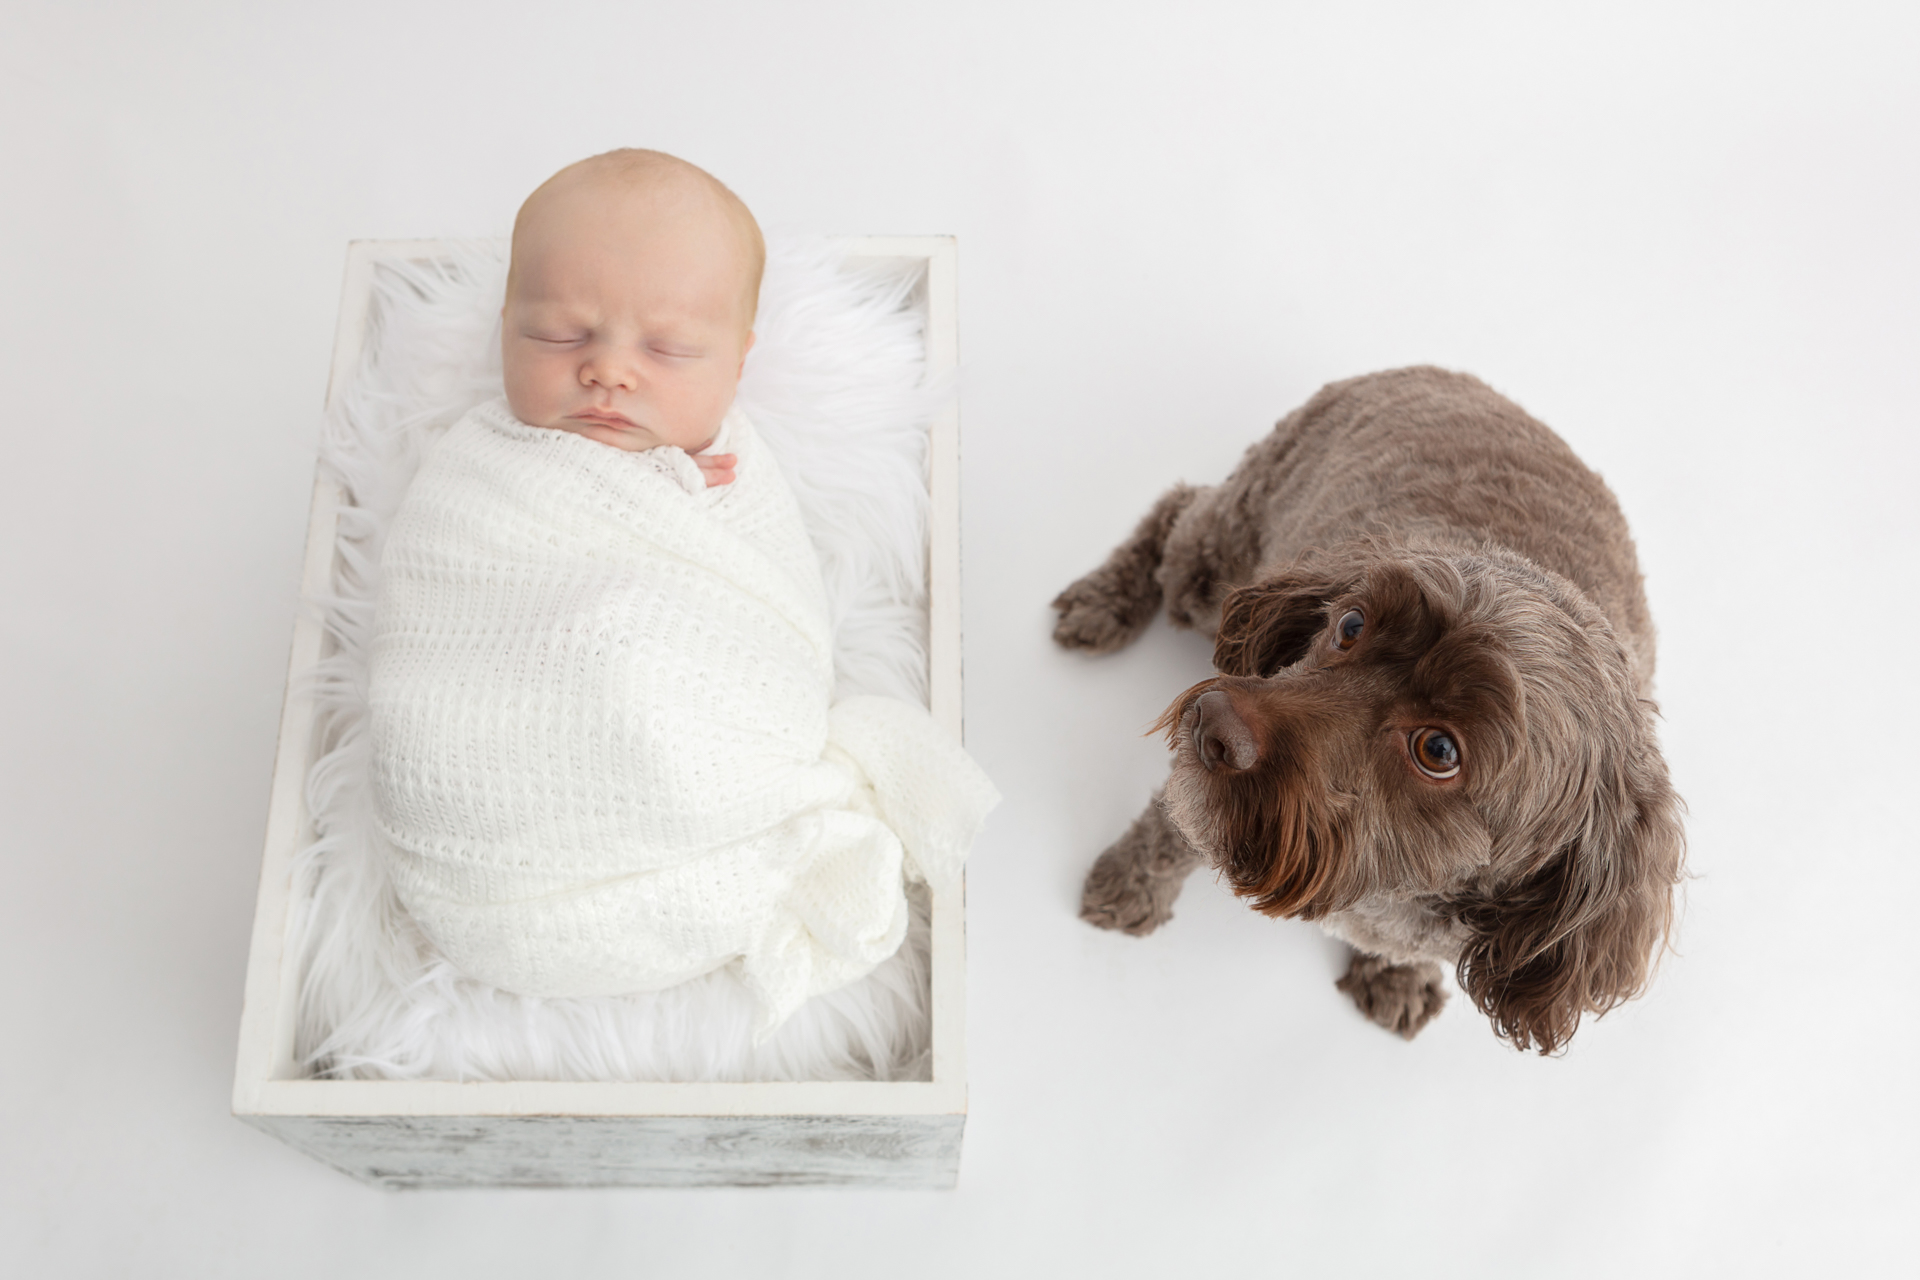 newborn photo with family dog; newborn baby boy wrapped in white; white flokati